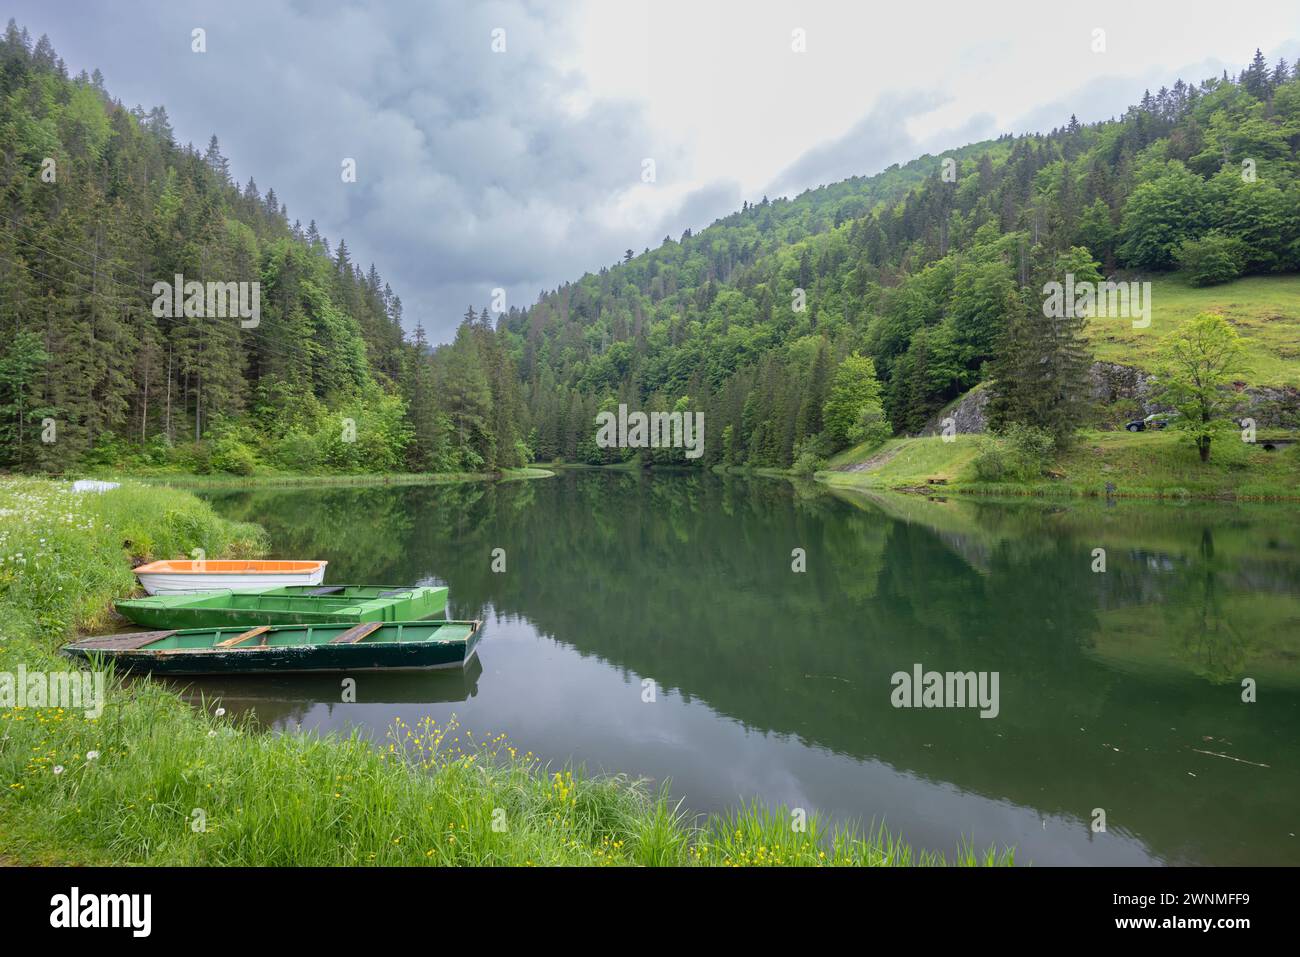 Landscape near Dedinky and Stratena with Hnilec river, National Park Slovak Paradise, Slovakia Stock Photo